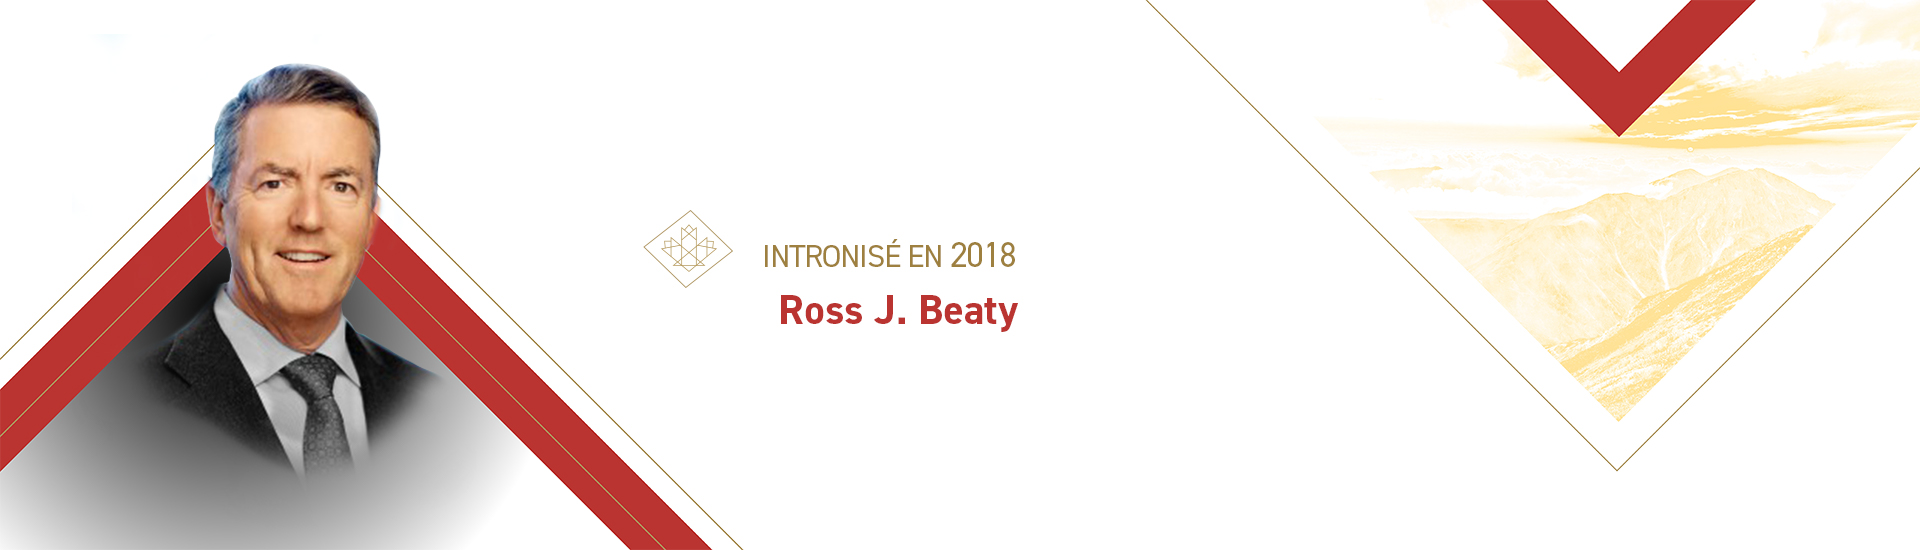 Ross J. Beatty (né en 1951)